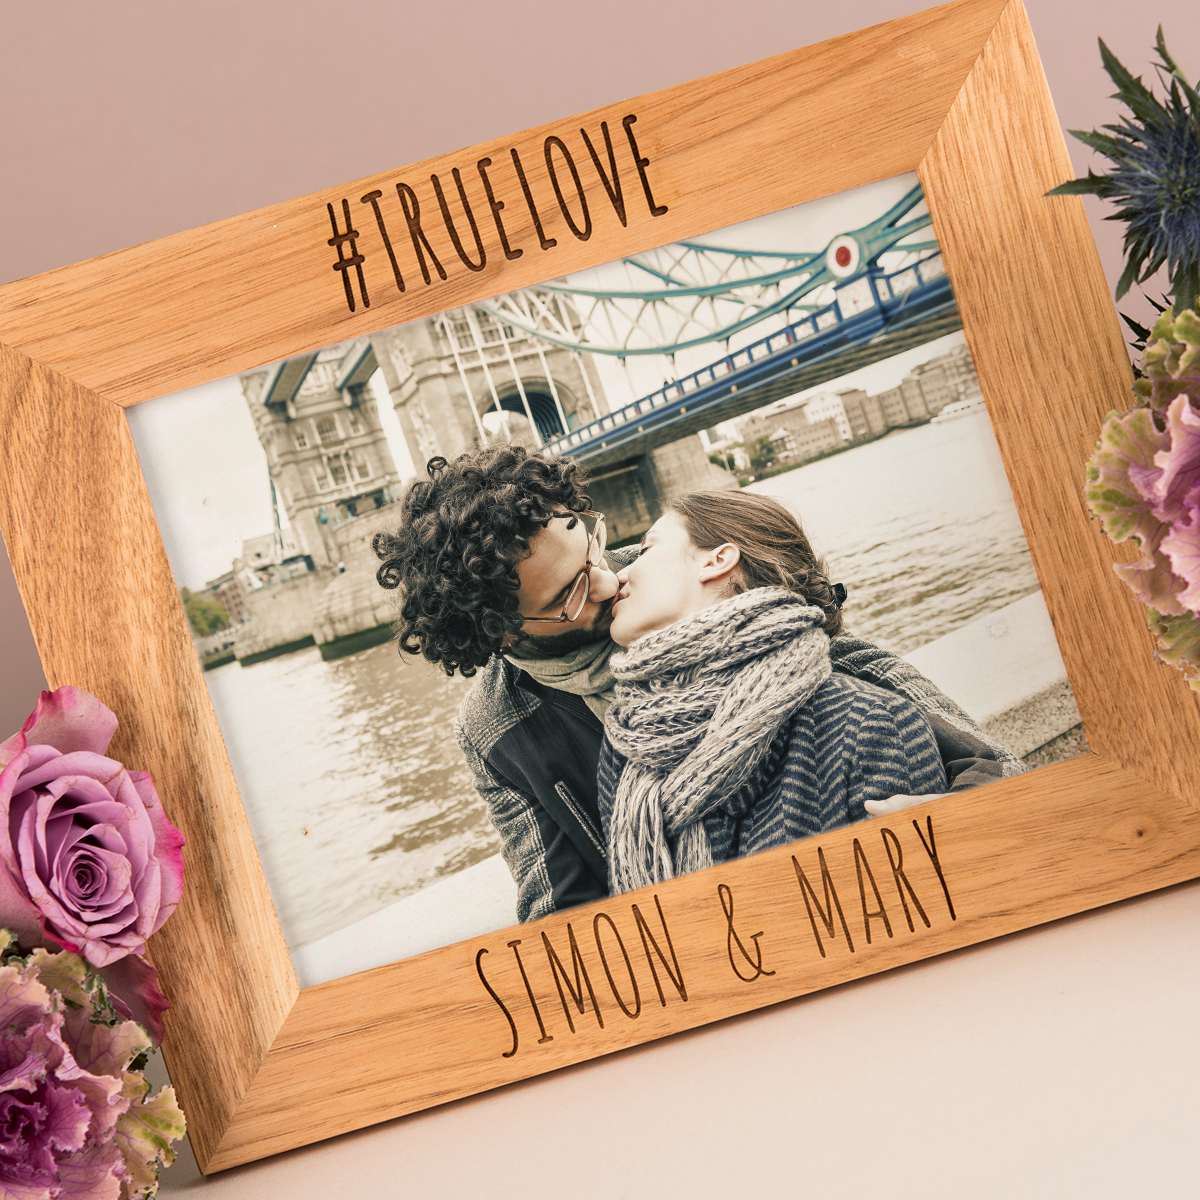 Engraved Wooden Photo Frame - #truelove